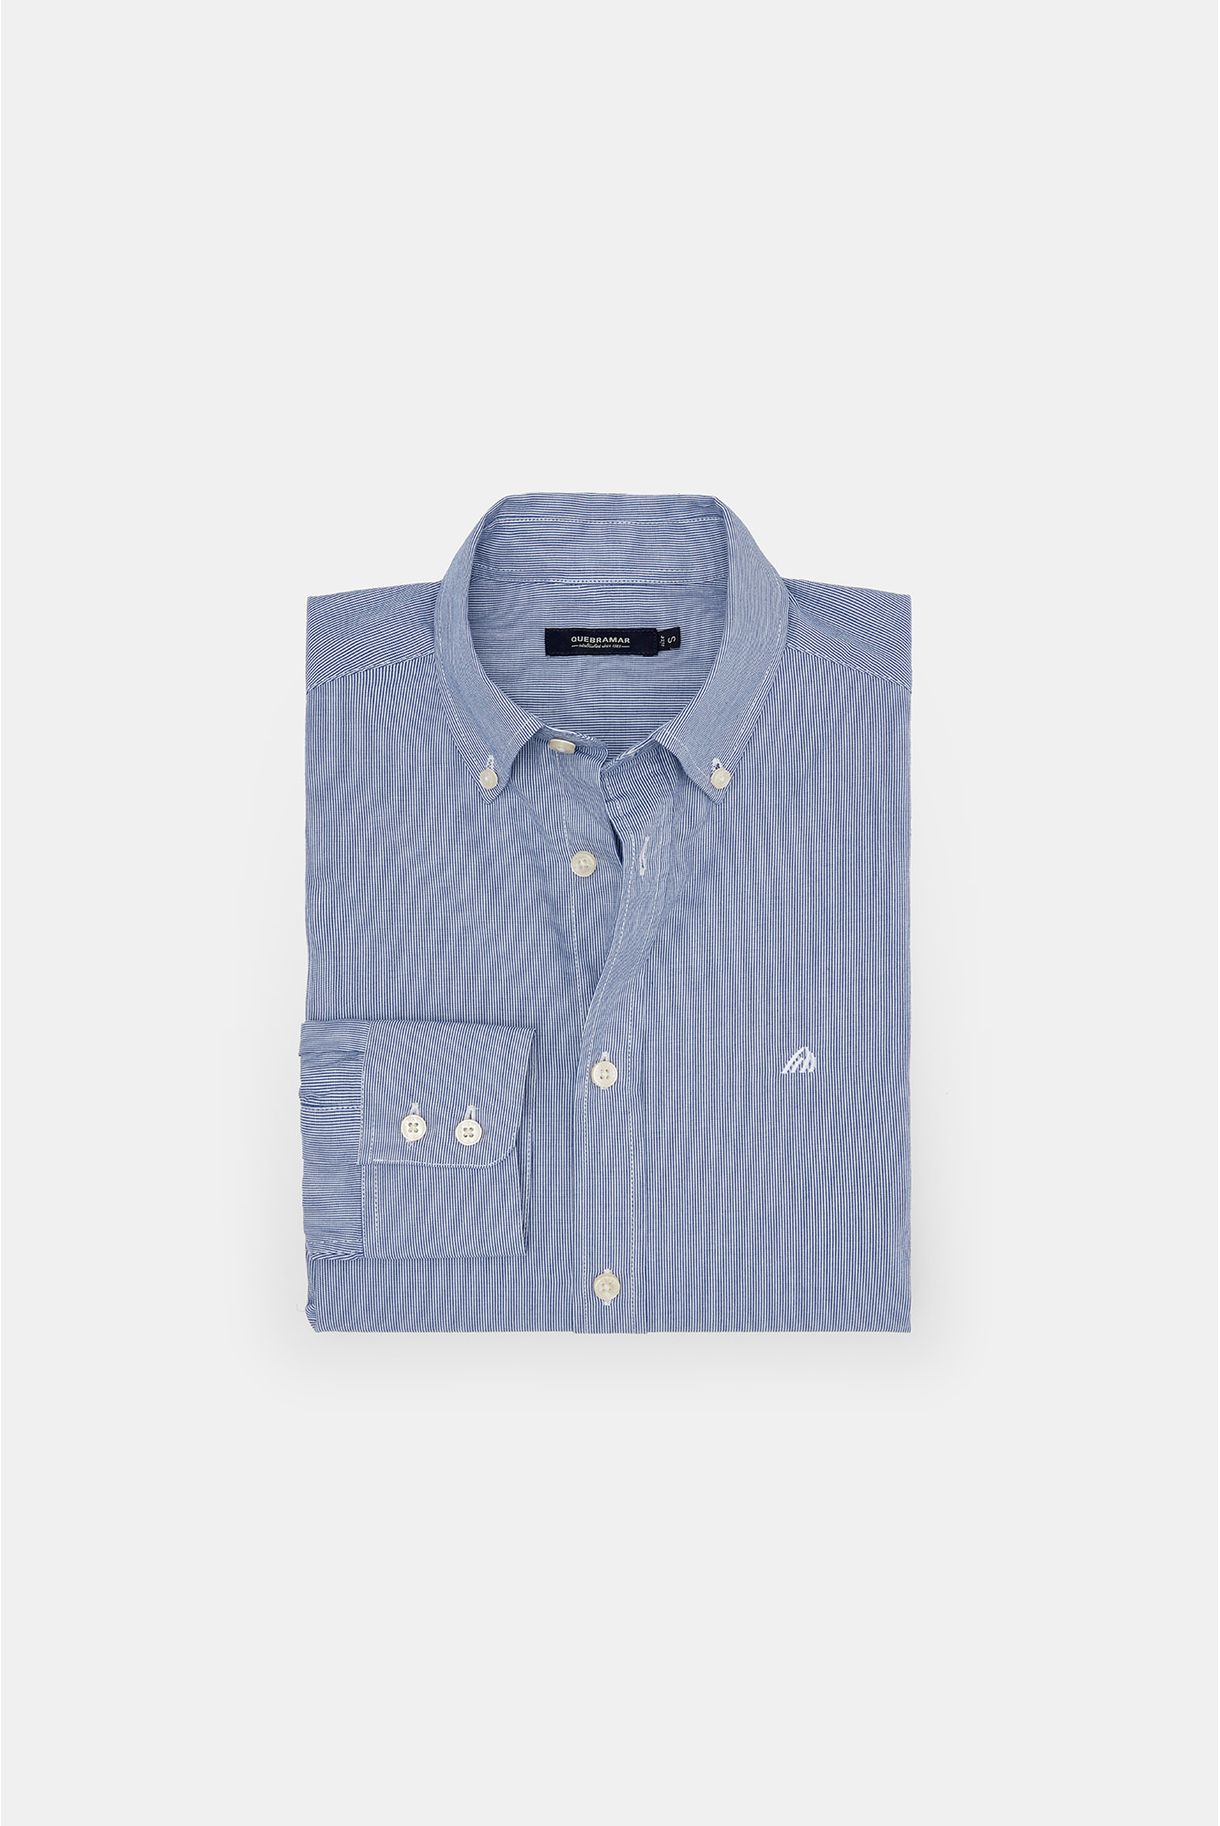 100% cotton micro striped shirt